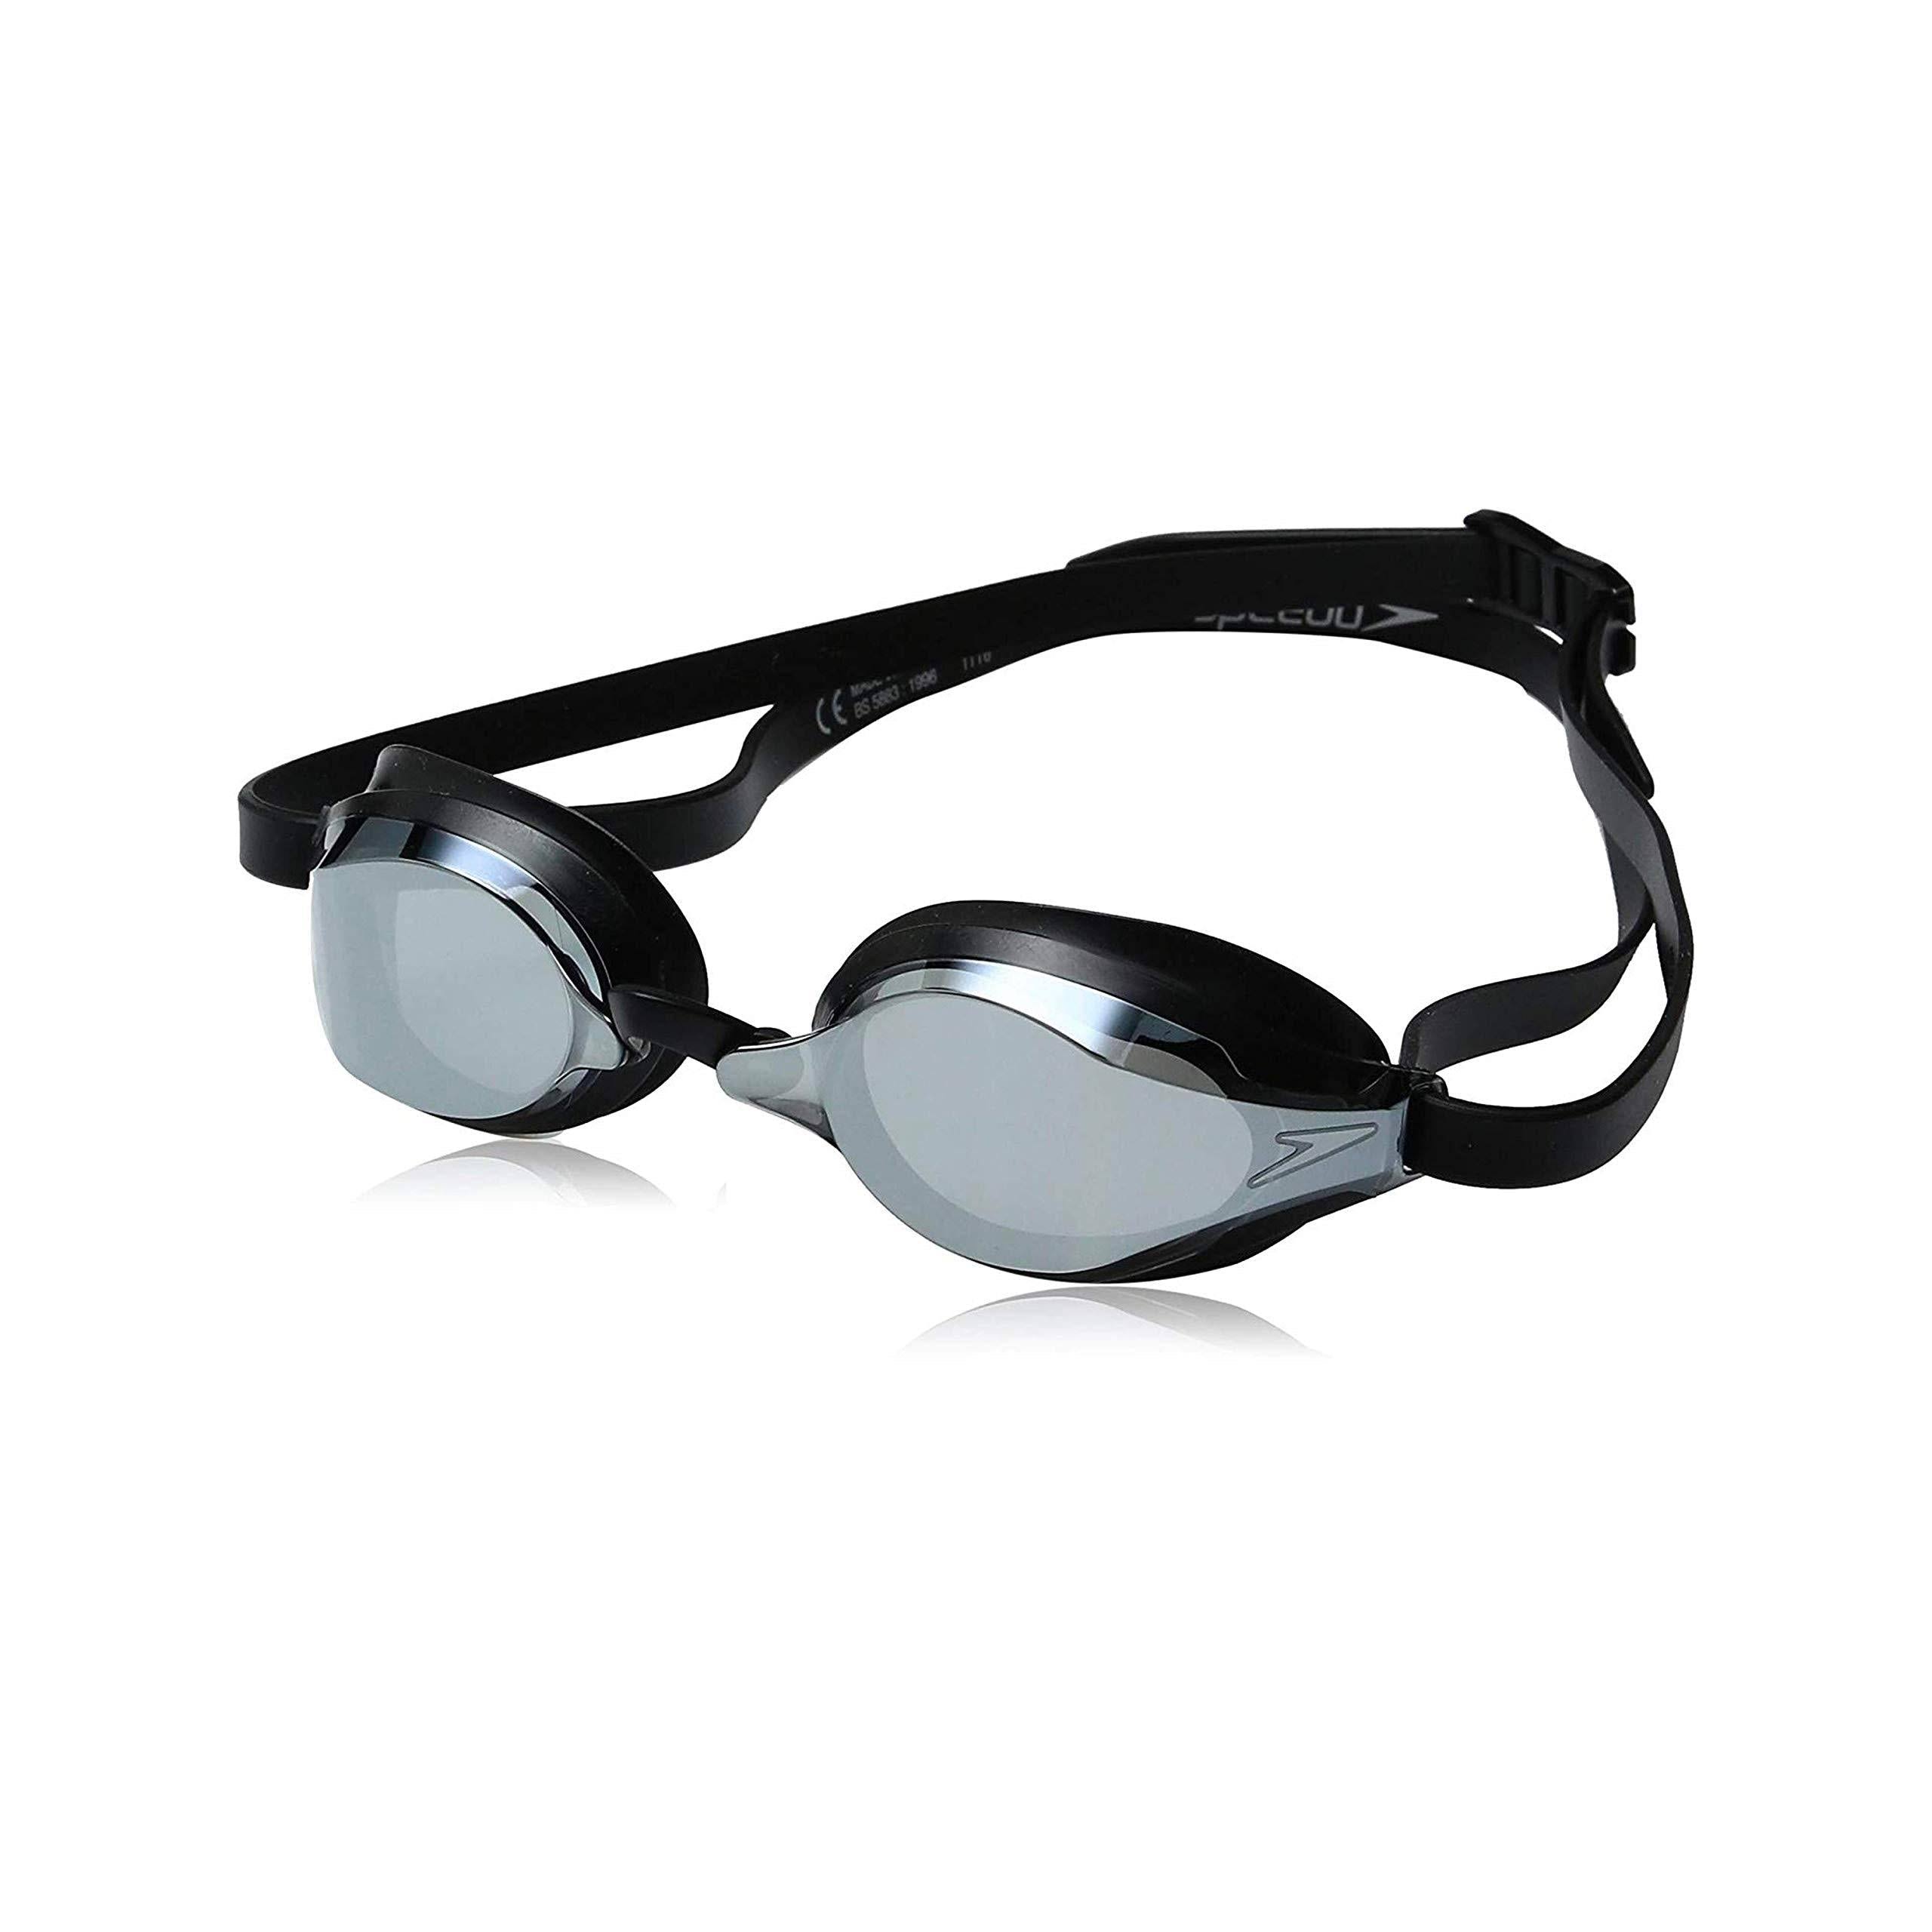 Speedo Speed Socket 2.0 Mirrored Swim Goggles - Black/Silver, One Size